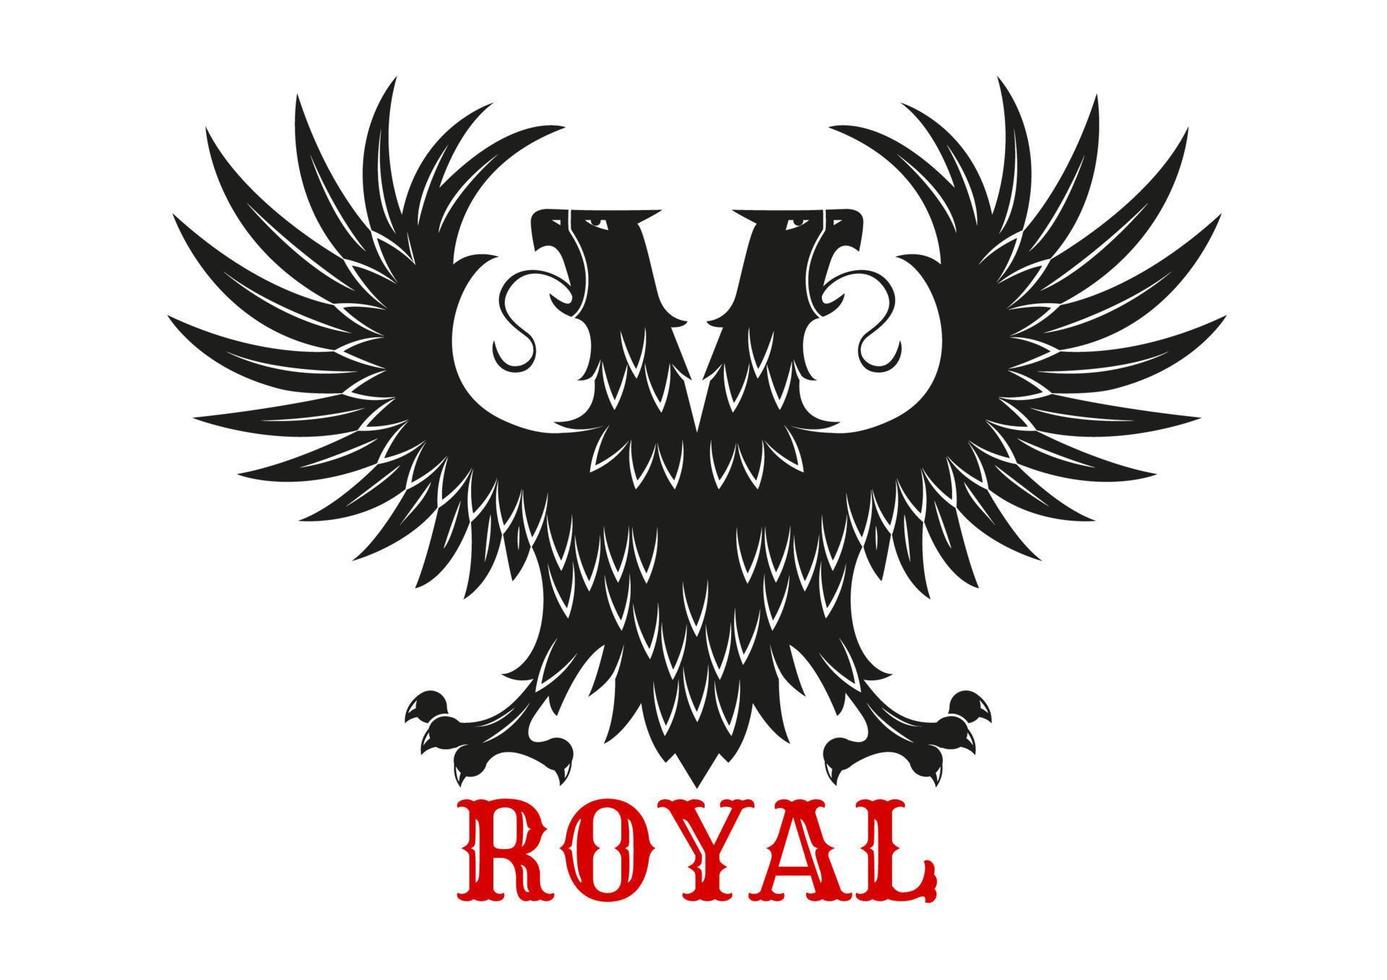 Royal double headed eagle black heraldic symbol vector